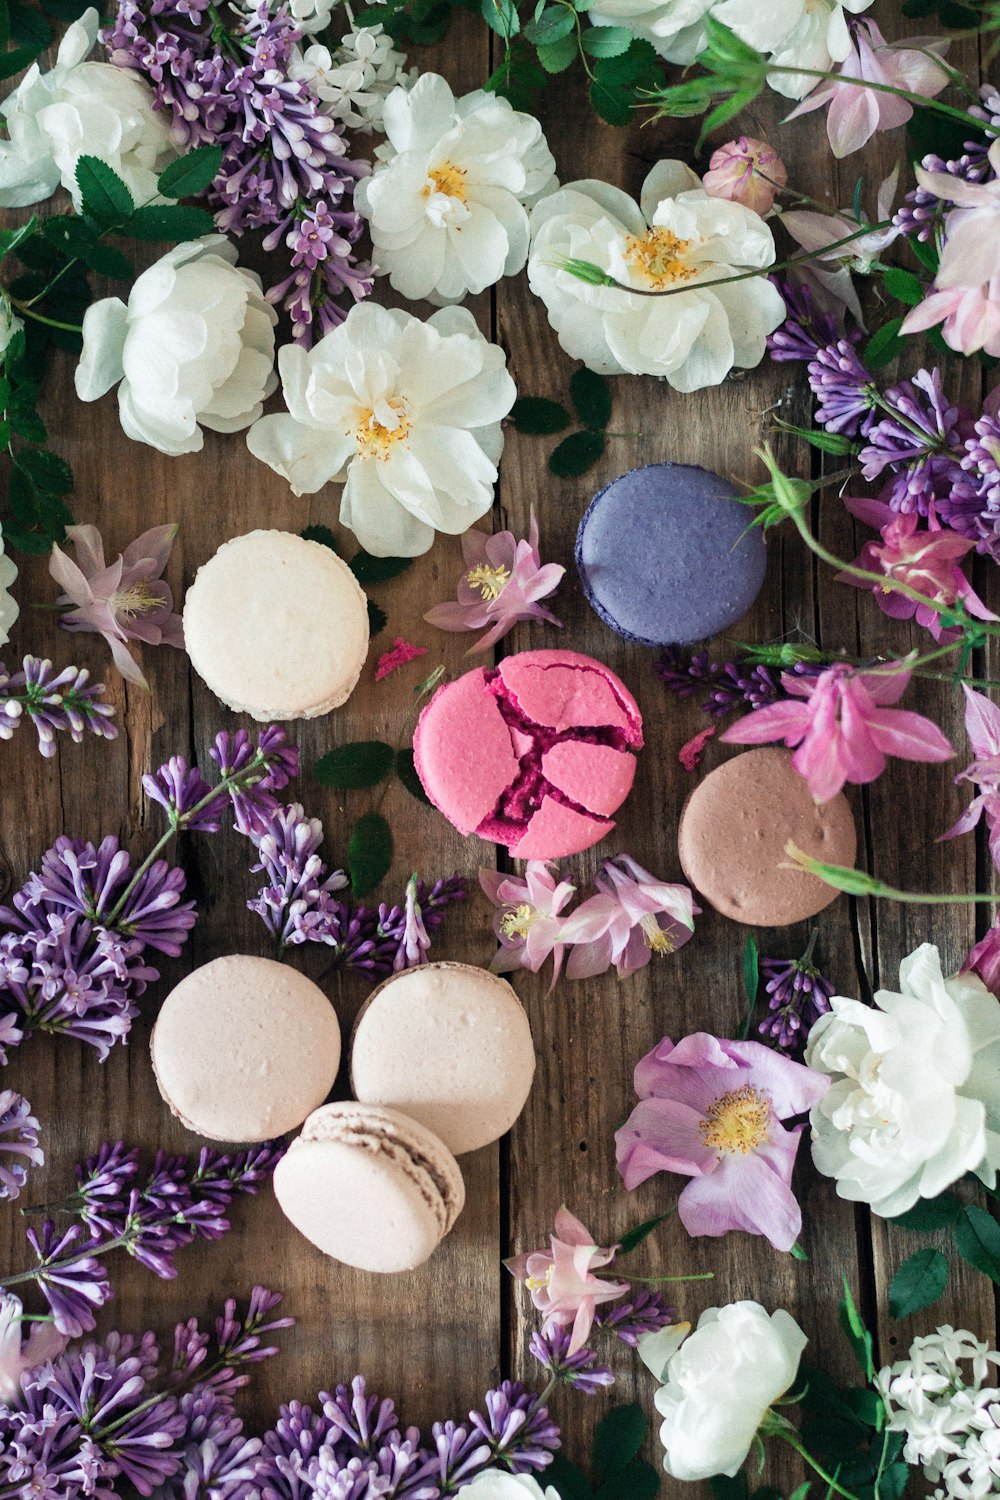 Foto flatlay de macarons franceses cercados de flores